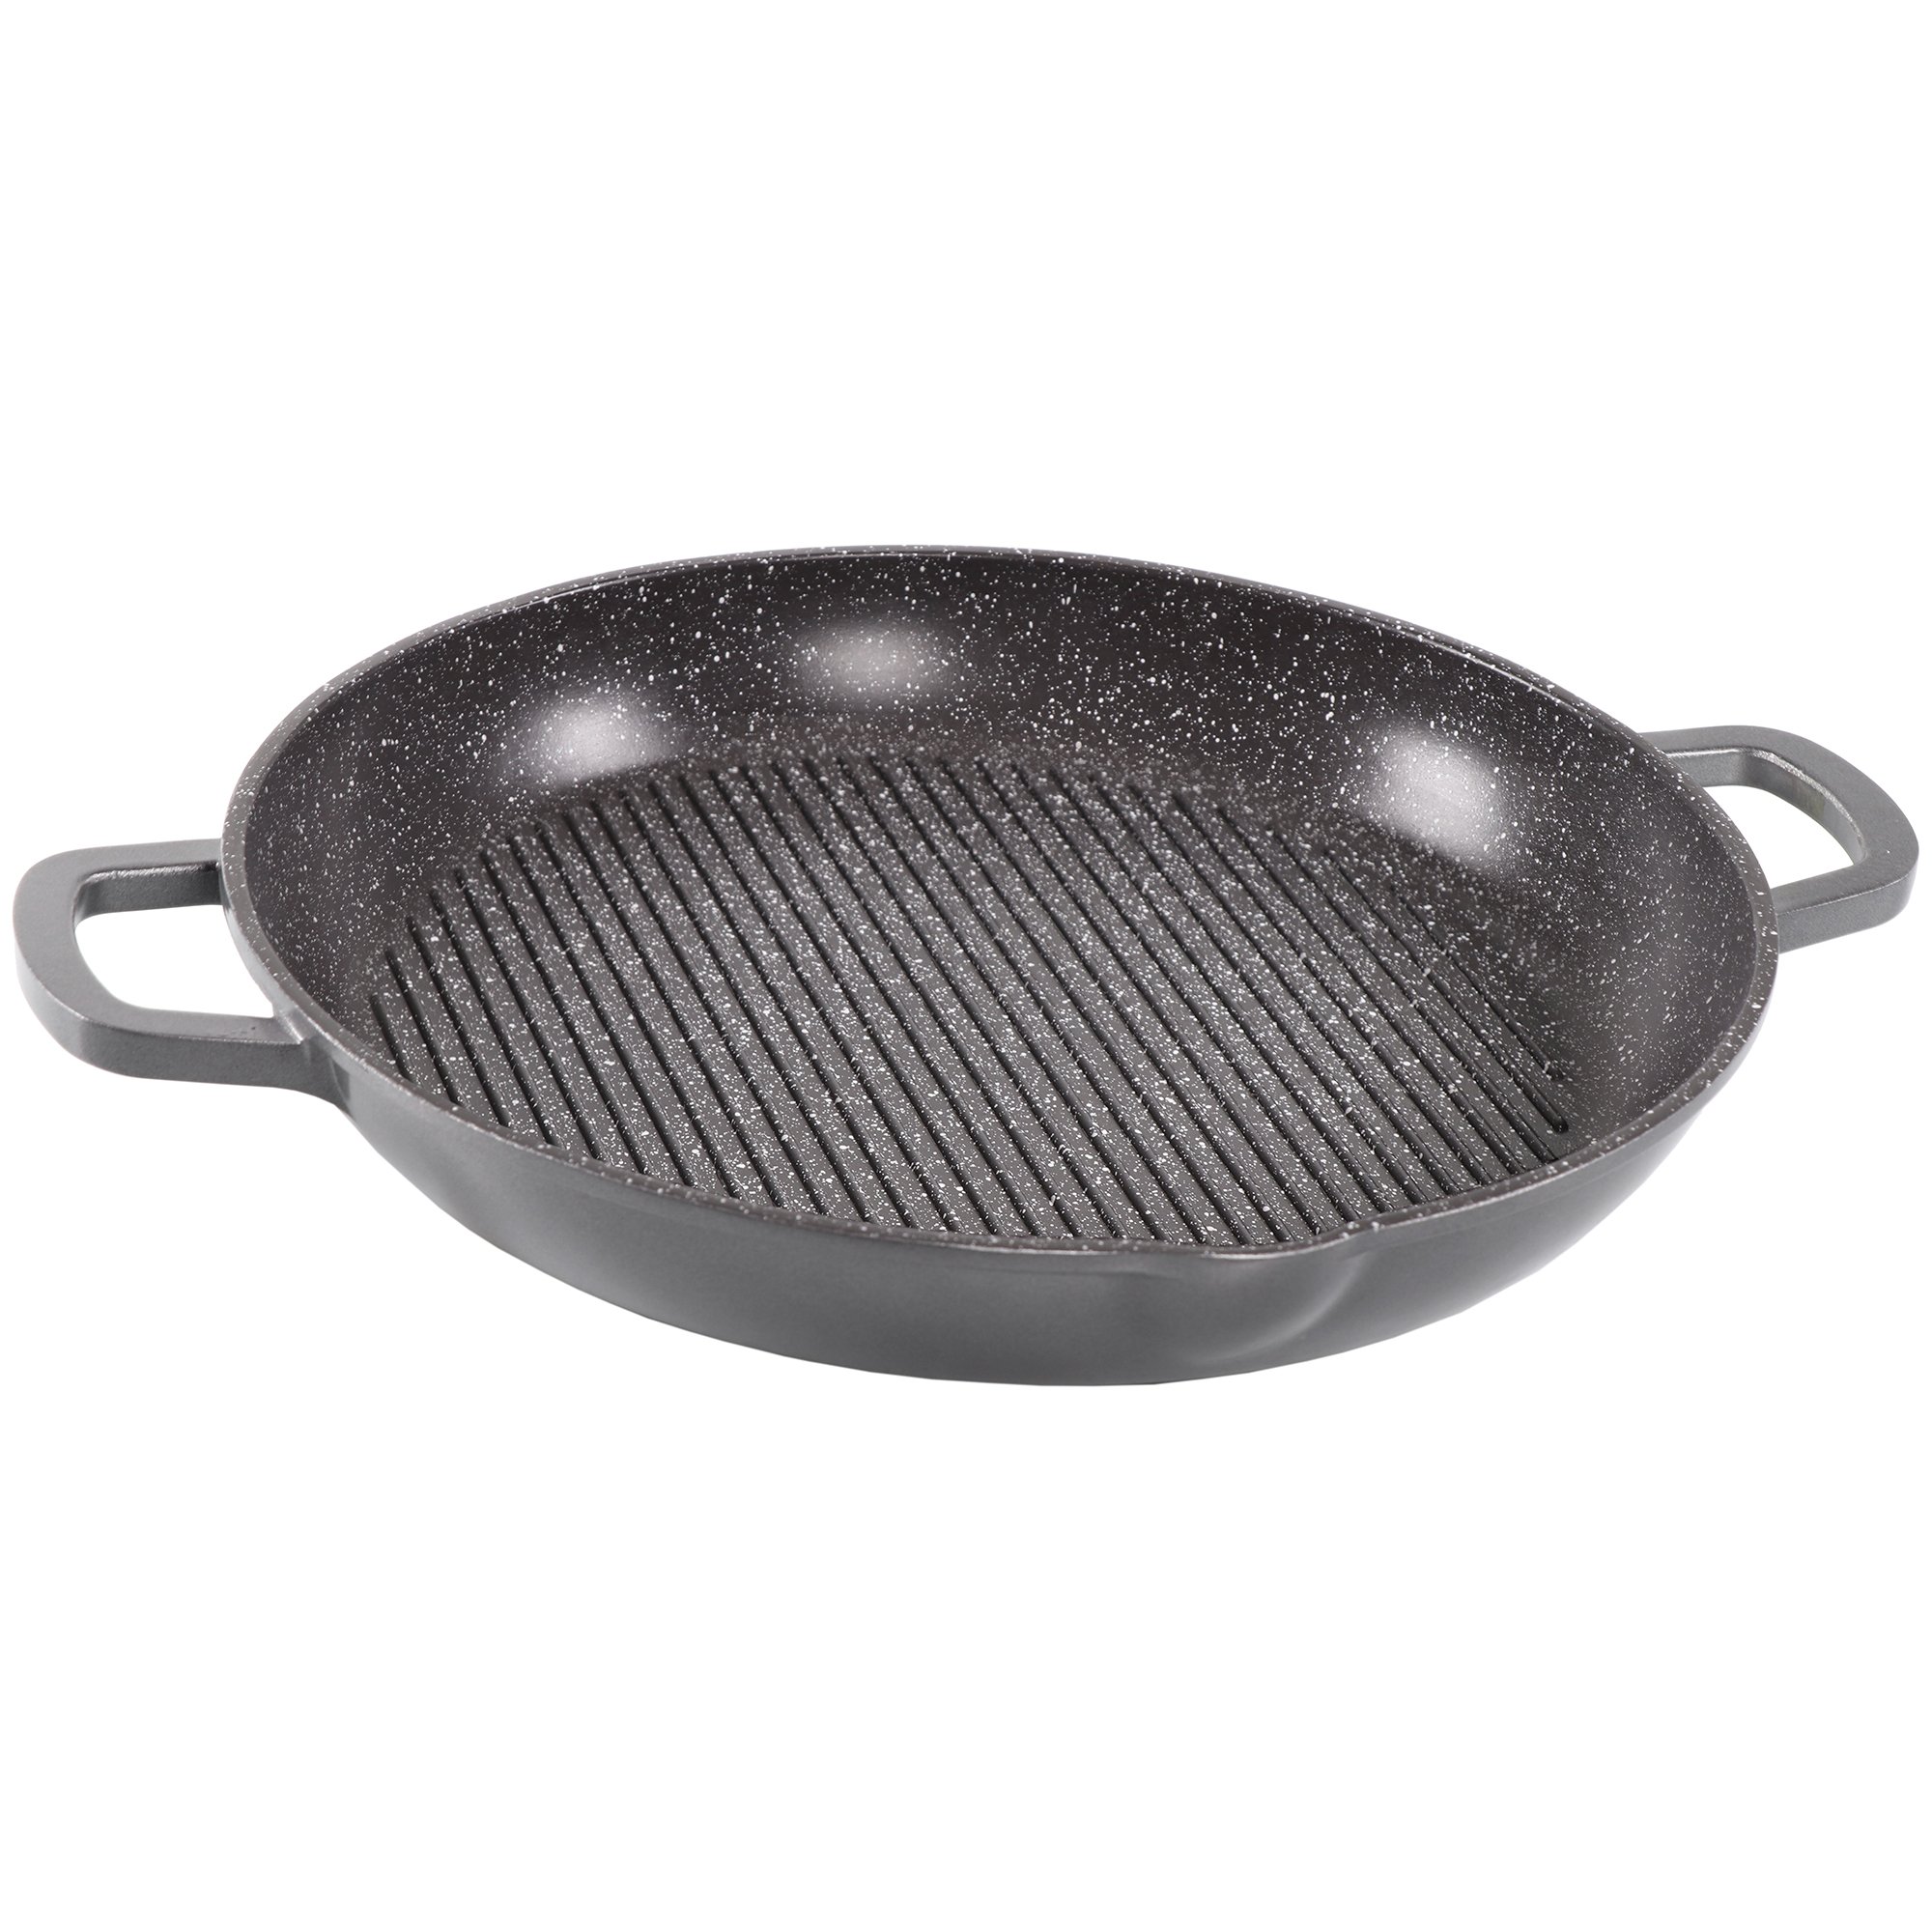 STONELINE® Round BBQ Griddle Pan 28 cm, Spout, Fat-Free Non-Stick Pan, Grill Plate